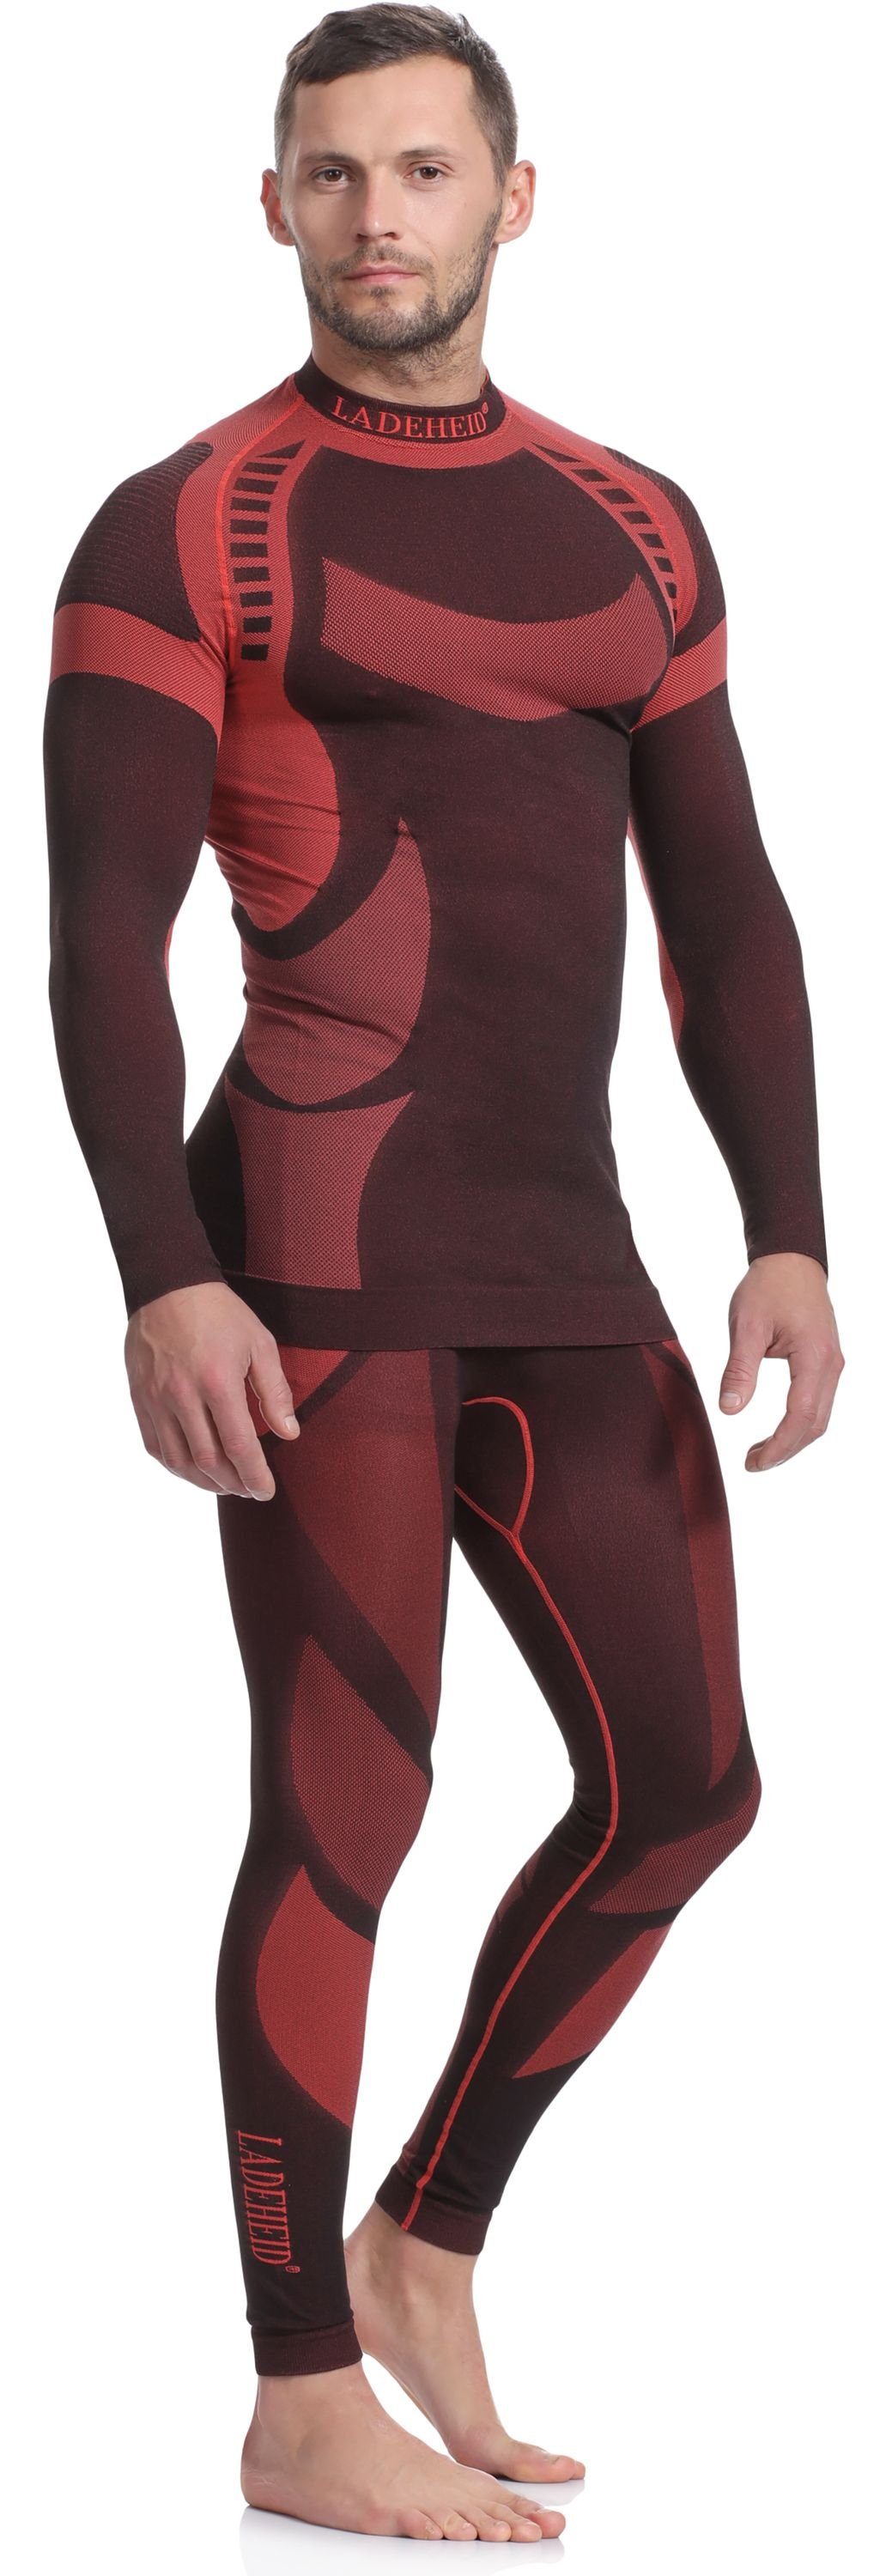 Funktionsunterwäsche Shirt langarm (Set, Schwarz/Rot Thermoaktiv Funktionsunterhemd Herren Unterhose mit Funktionsunterhose) Ladeheid Set